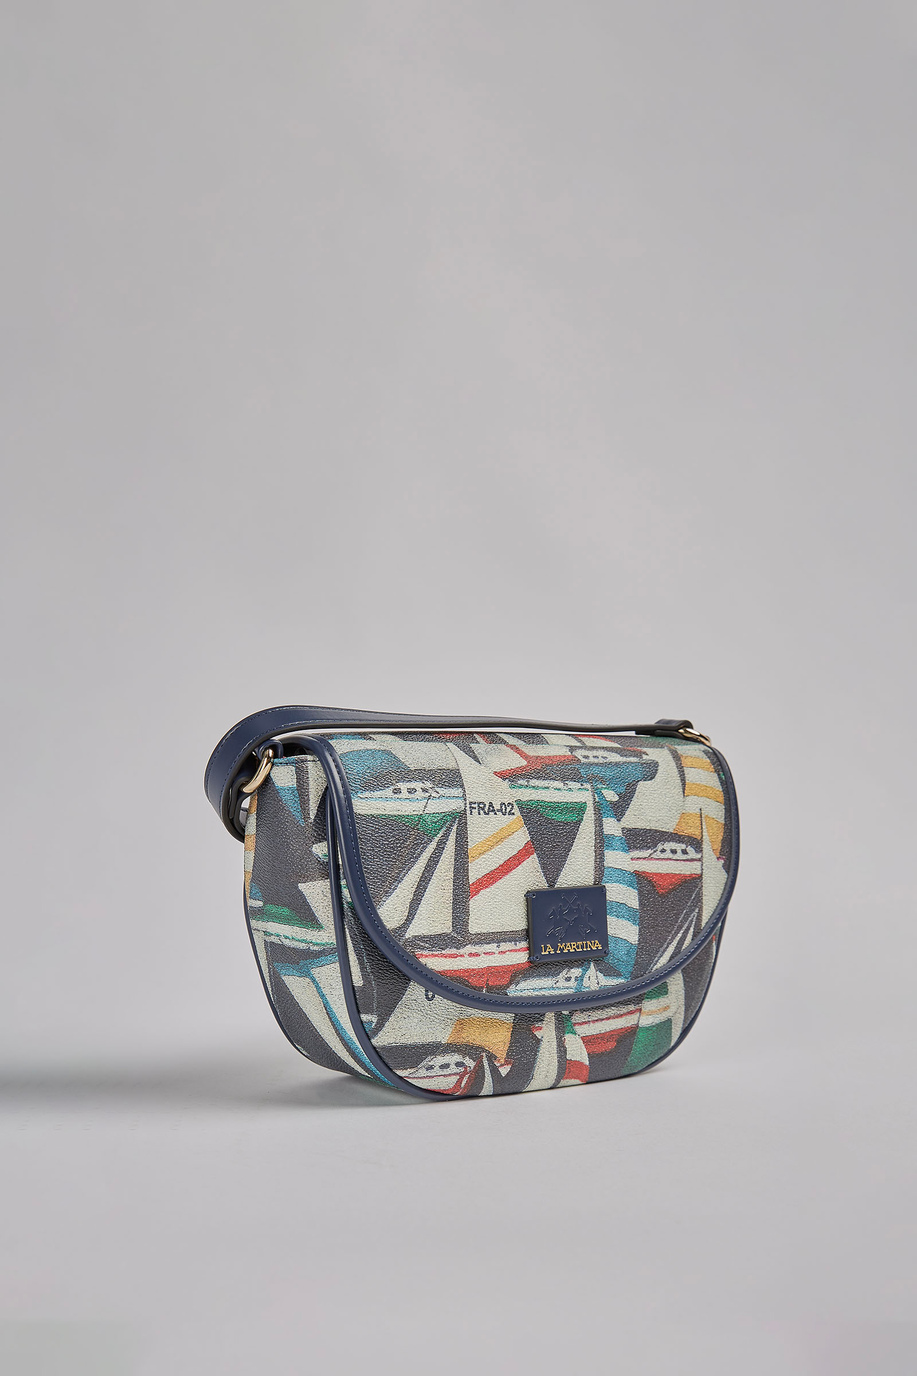 Tasche aus PU-Gewebe - Damen lederwaren | La Martina - Official Online Shop